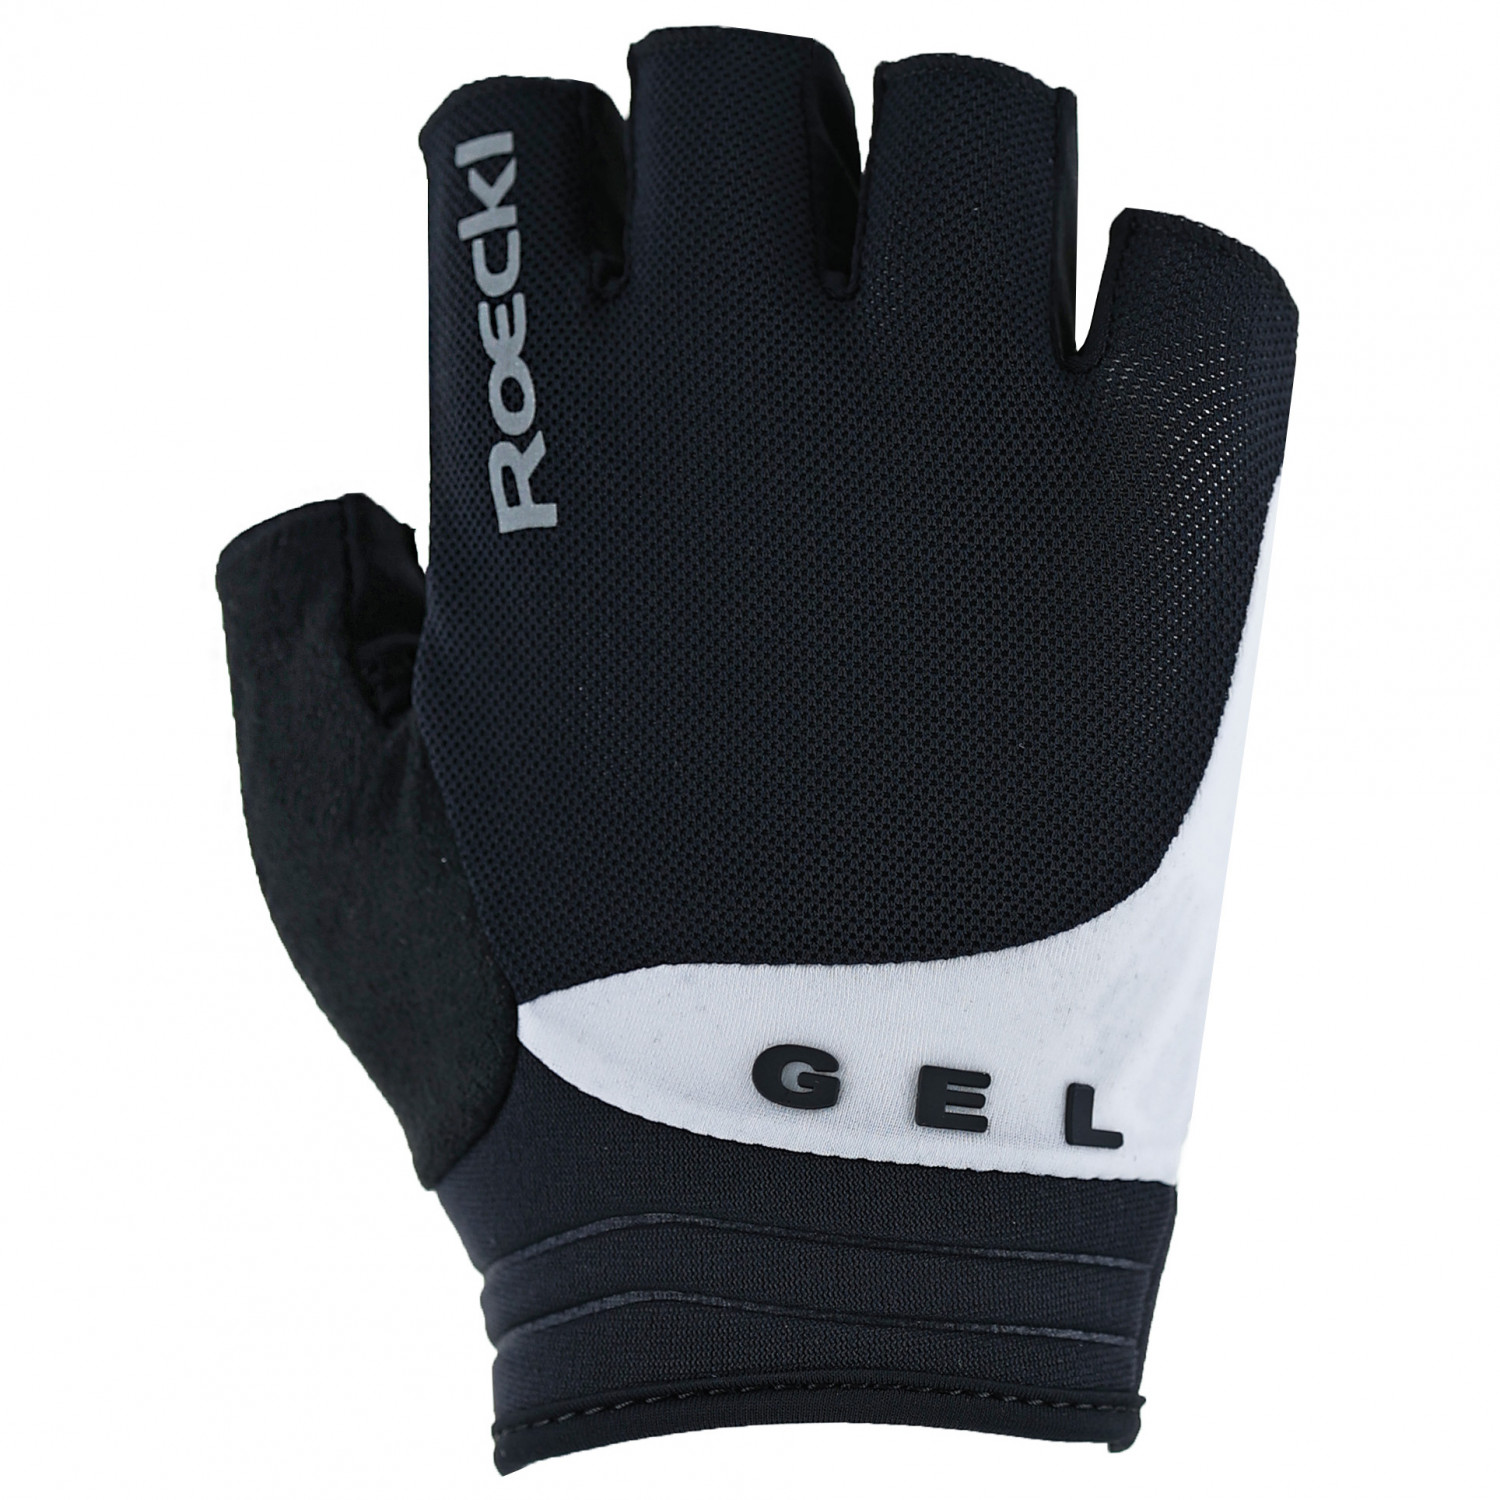 Перчатки Roeckl Sports Itamos 2, цвет Black/White новинка 2022 велосипедные спортивные перчатки для горного велосипеда велосипедные перчатки с закрытыми пальцами перчатки для мотокросса mx